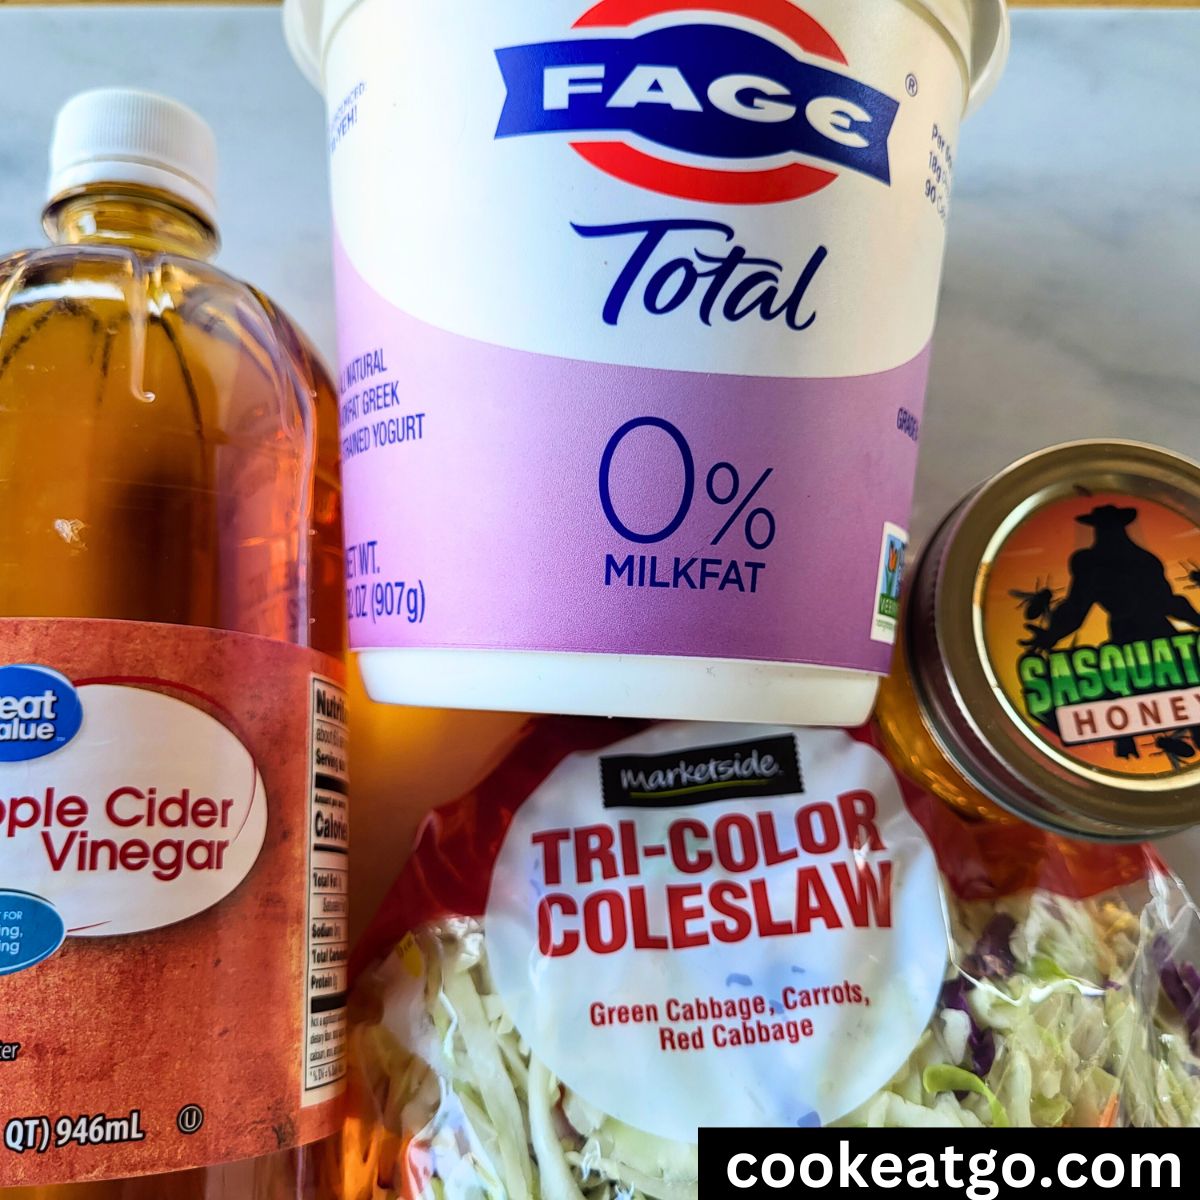 Apple cider vinegar, greek yogurt, honey in a jar, and a bag of cole slaw mix